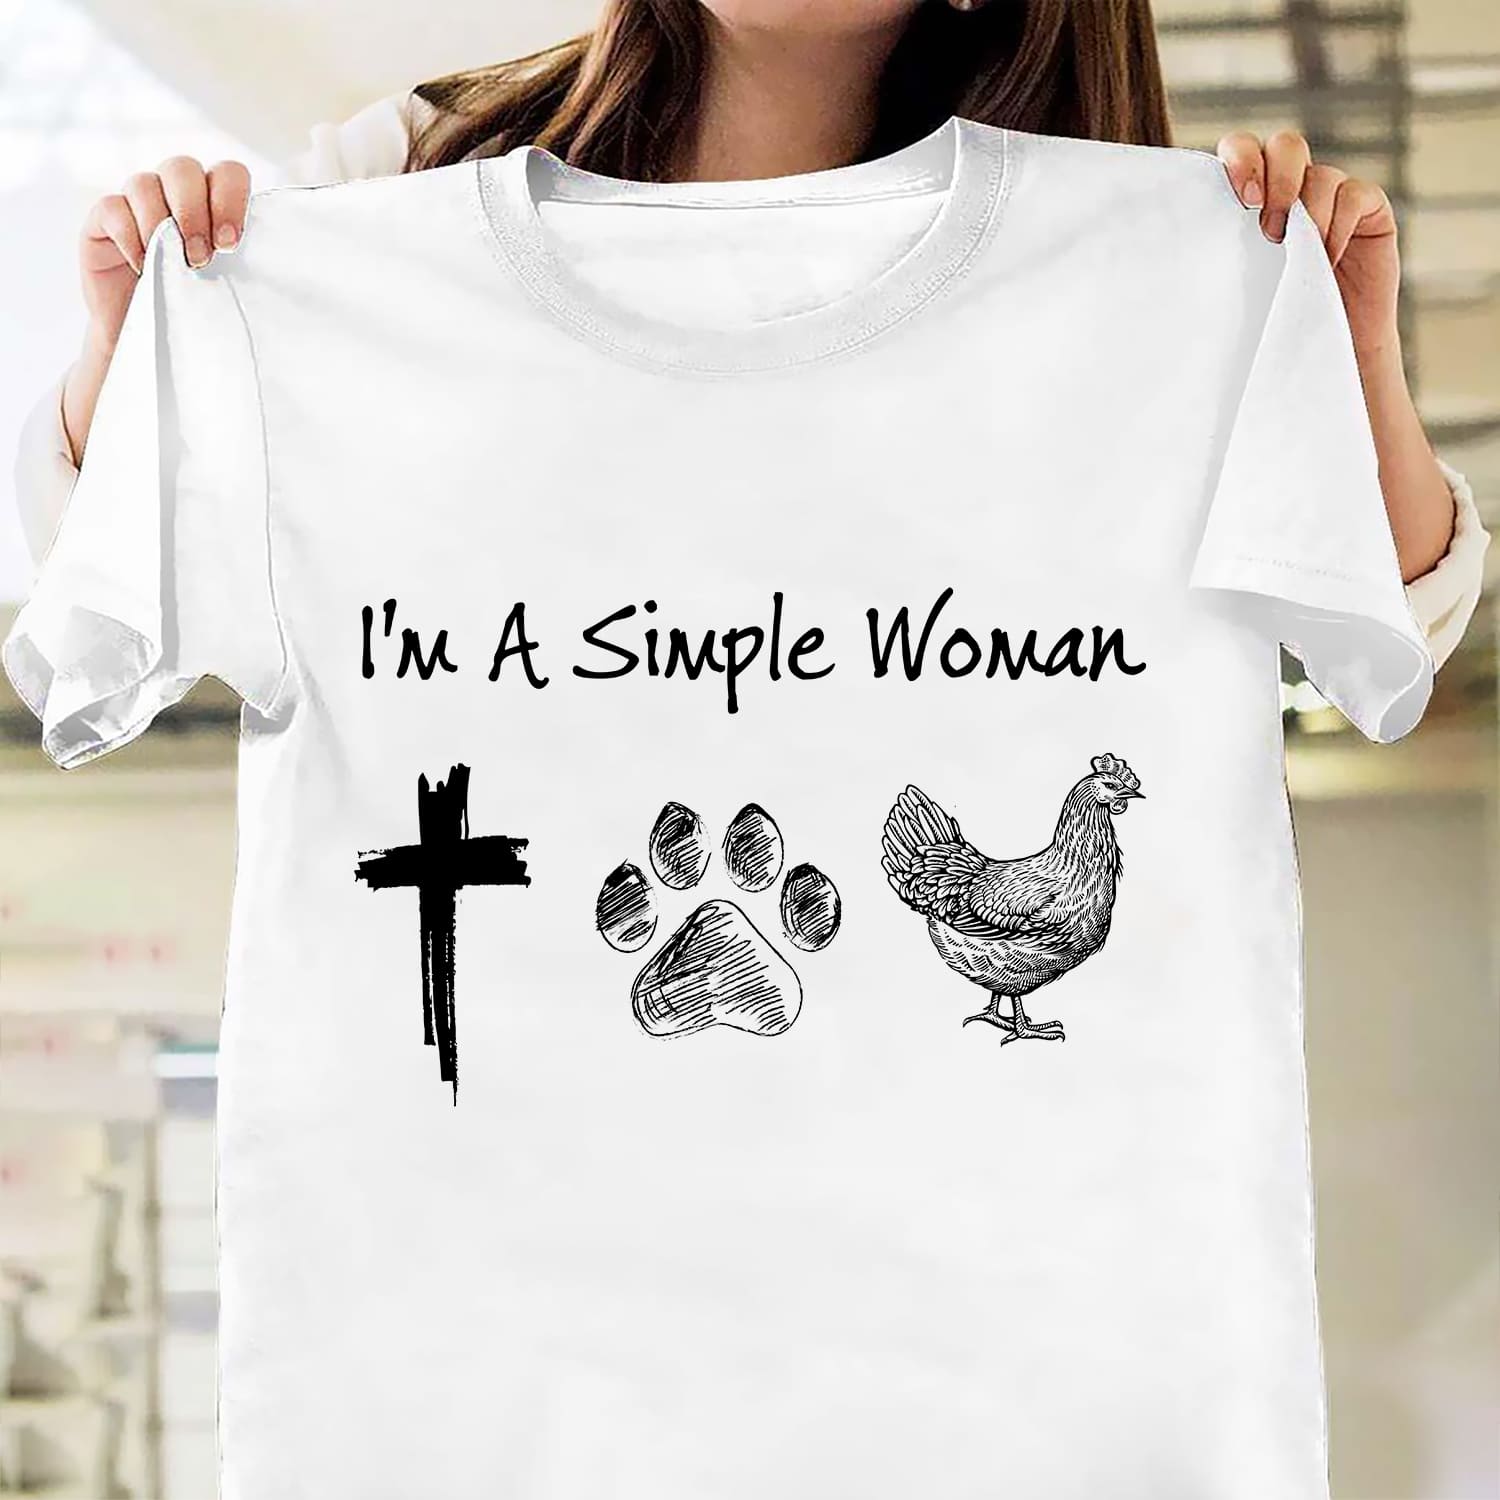 I'm a simple woman - Jesus Apparel